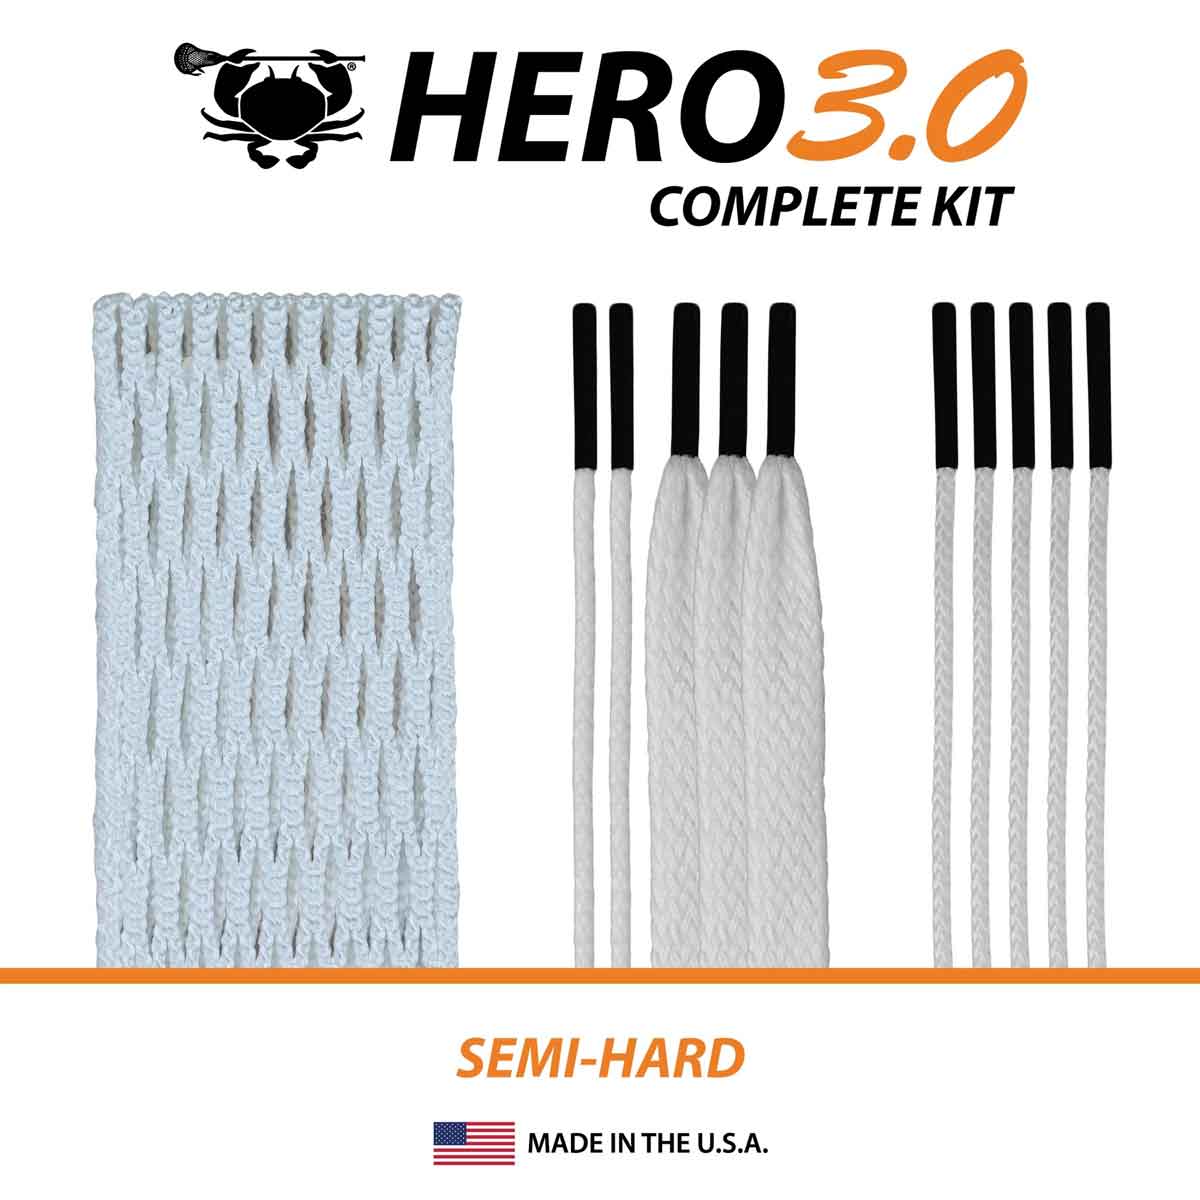 Picture of the white ECD Hero 3.0 Semi-Hard Complete Lacrosse Kit